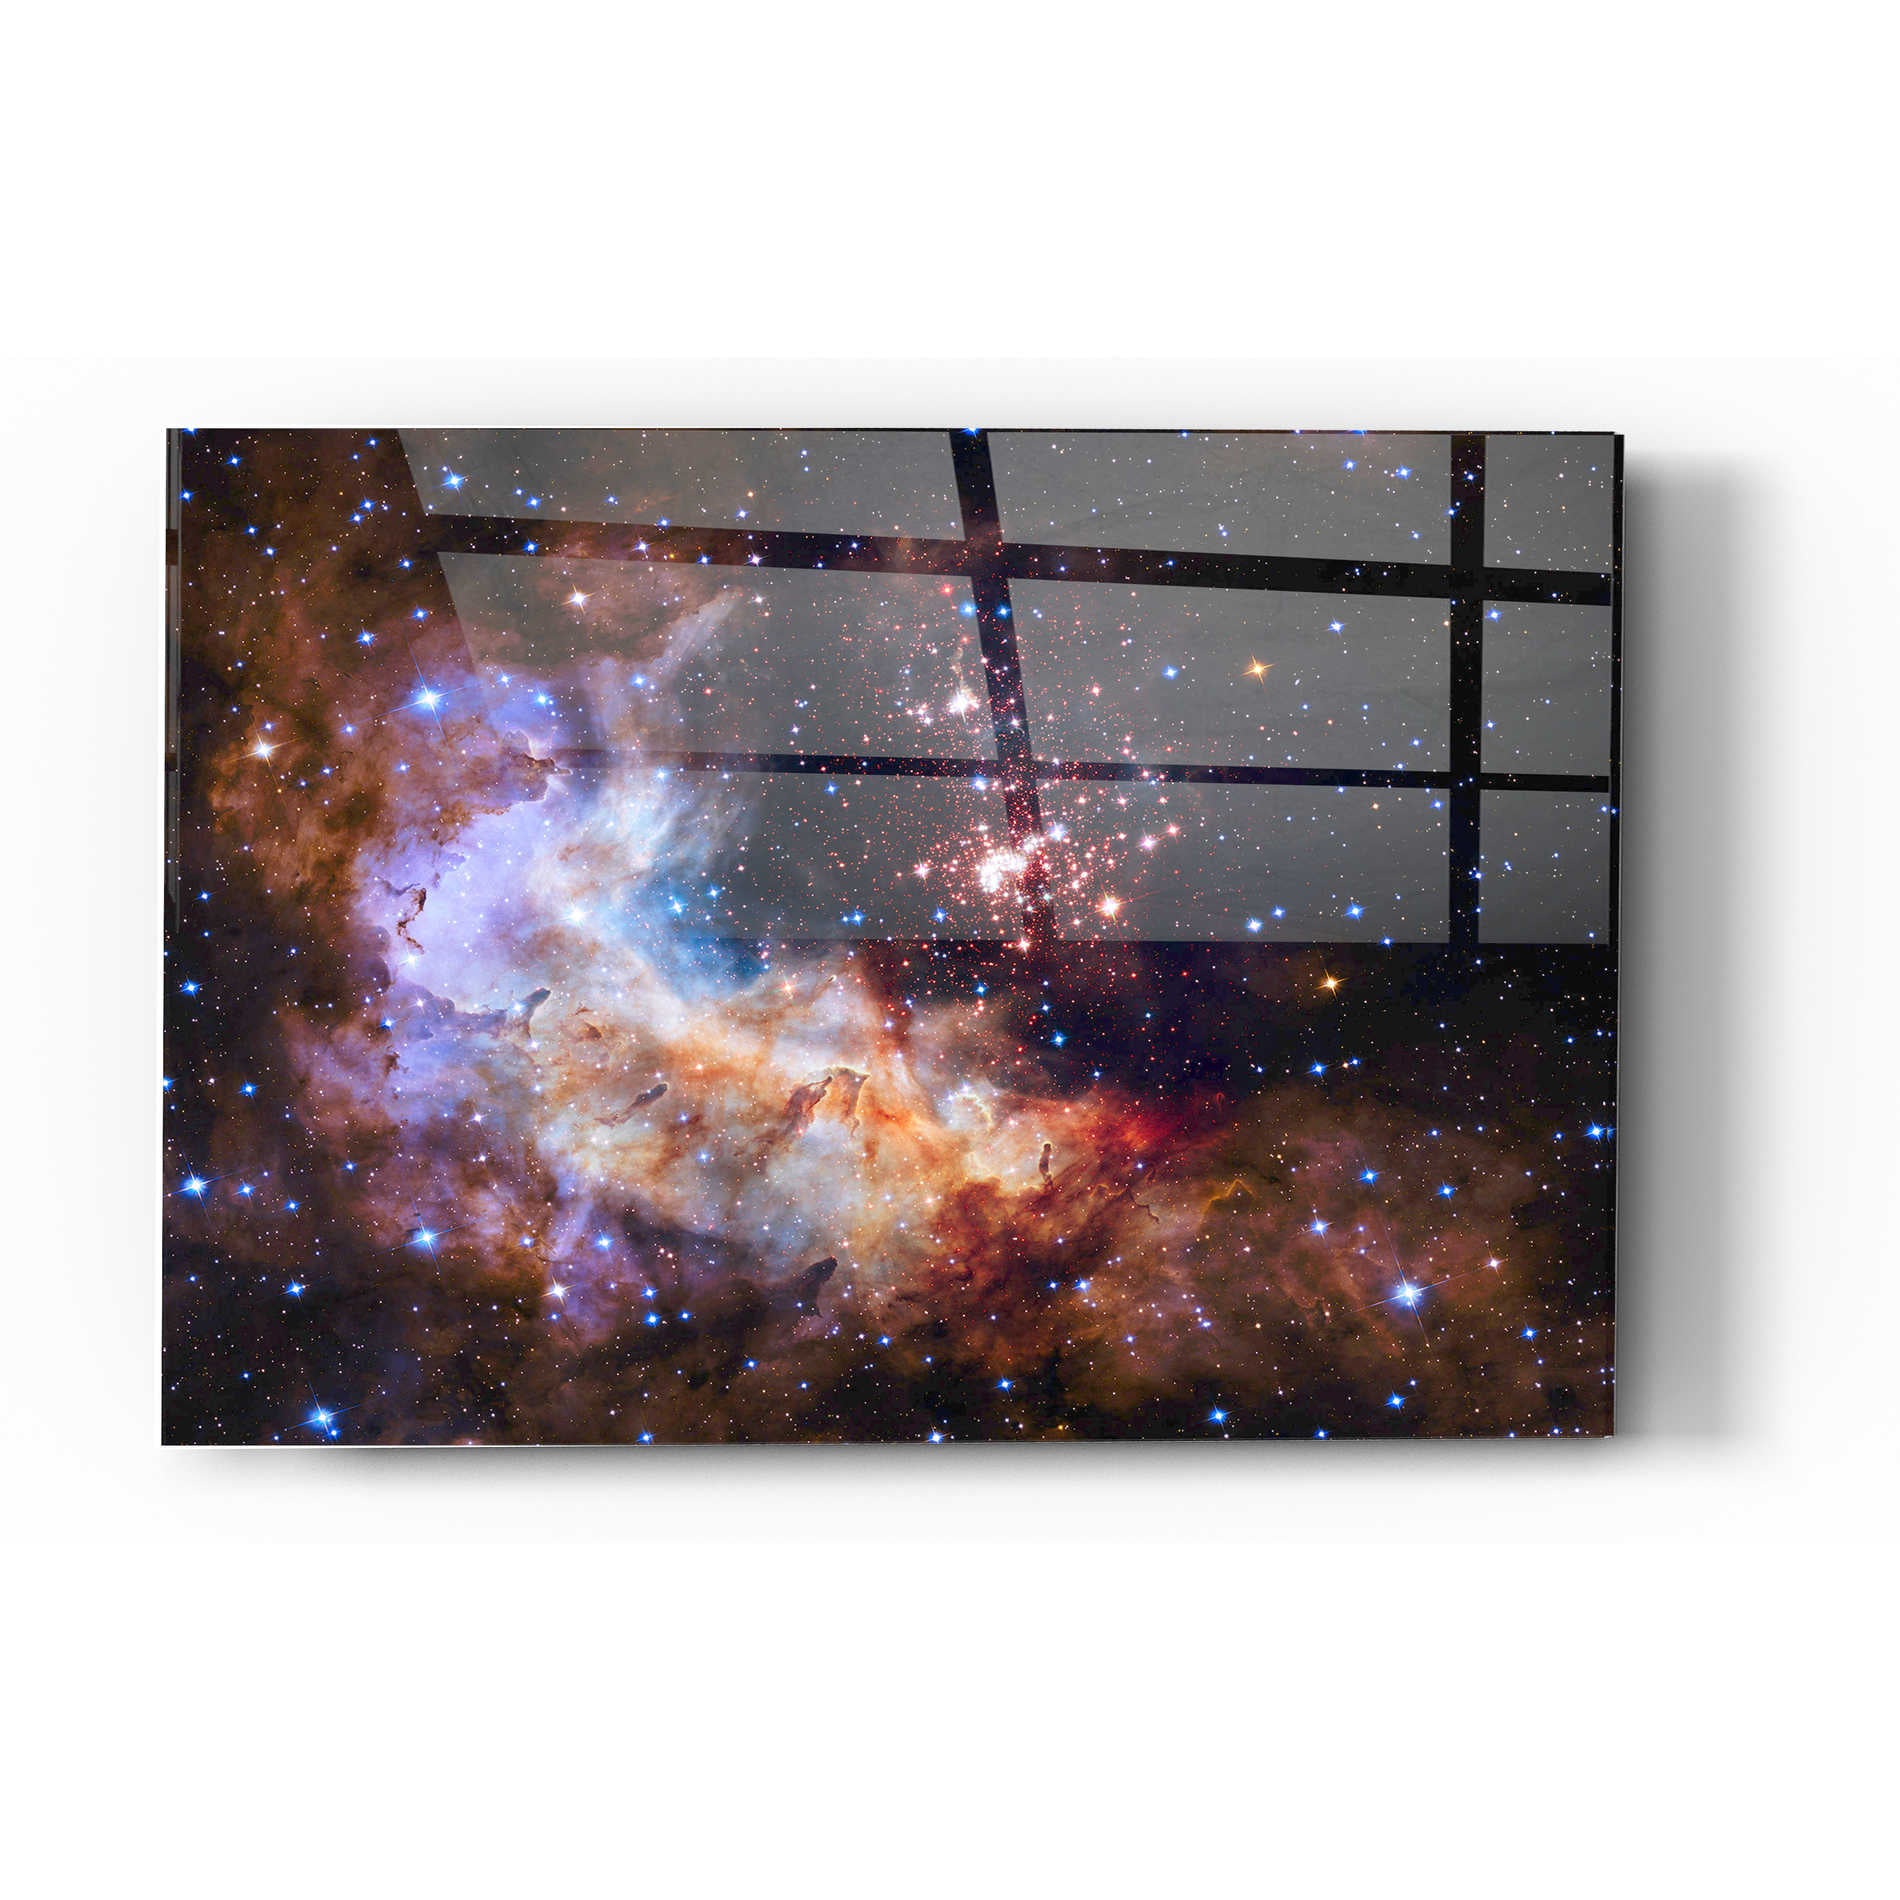 Epic Art 'Celestial Fireworks' Hubble Space Telescope Acrylic Glass Wall Art,12x16